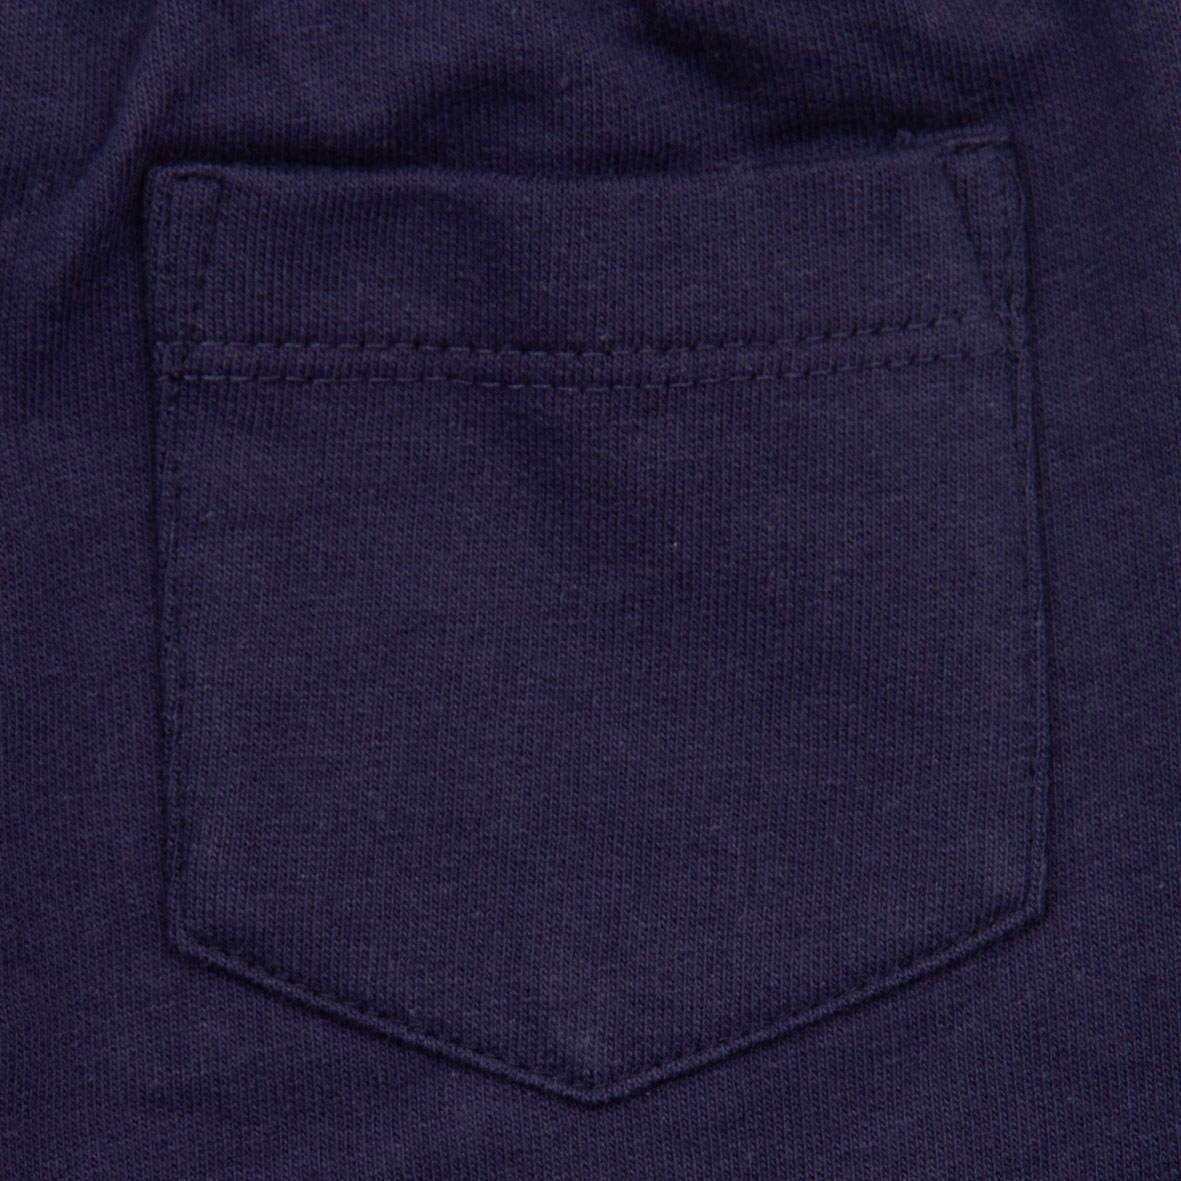 Mawi pantalone felpa con stampa 9m - Mawi